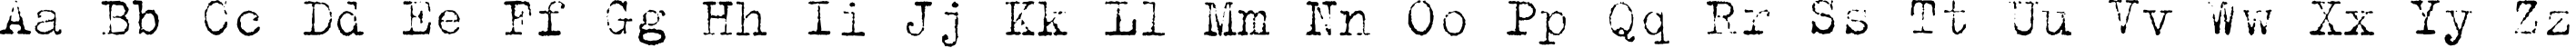 Пример написания английского алфавита шрифтом TrixieCyr-Light